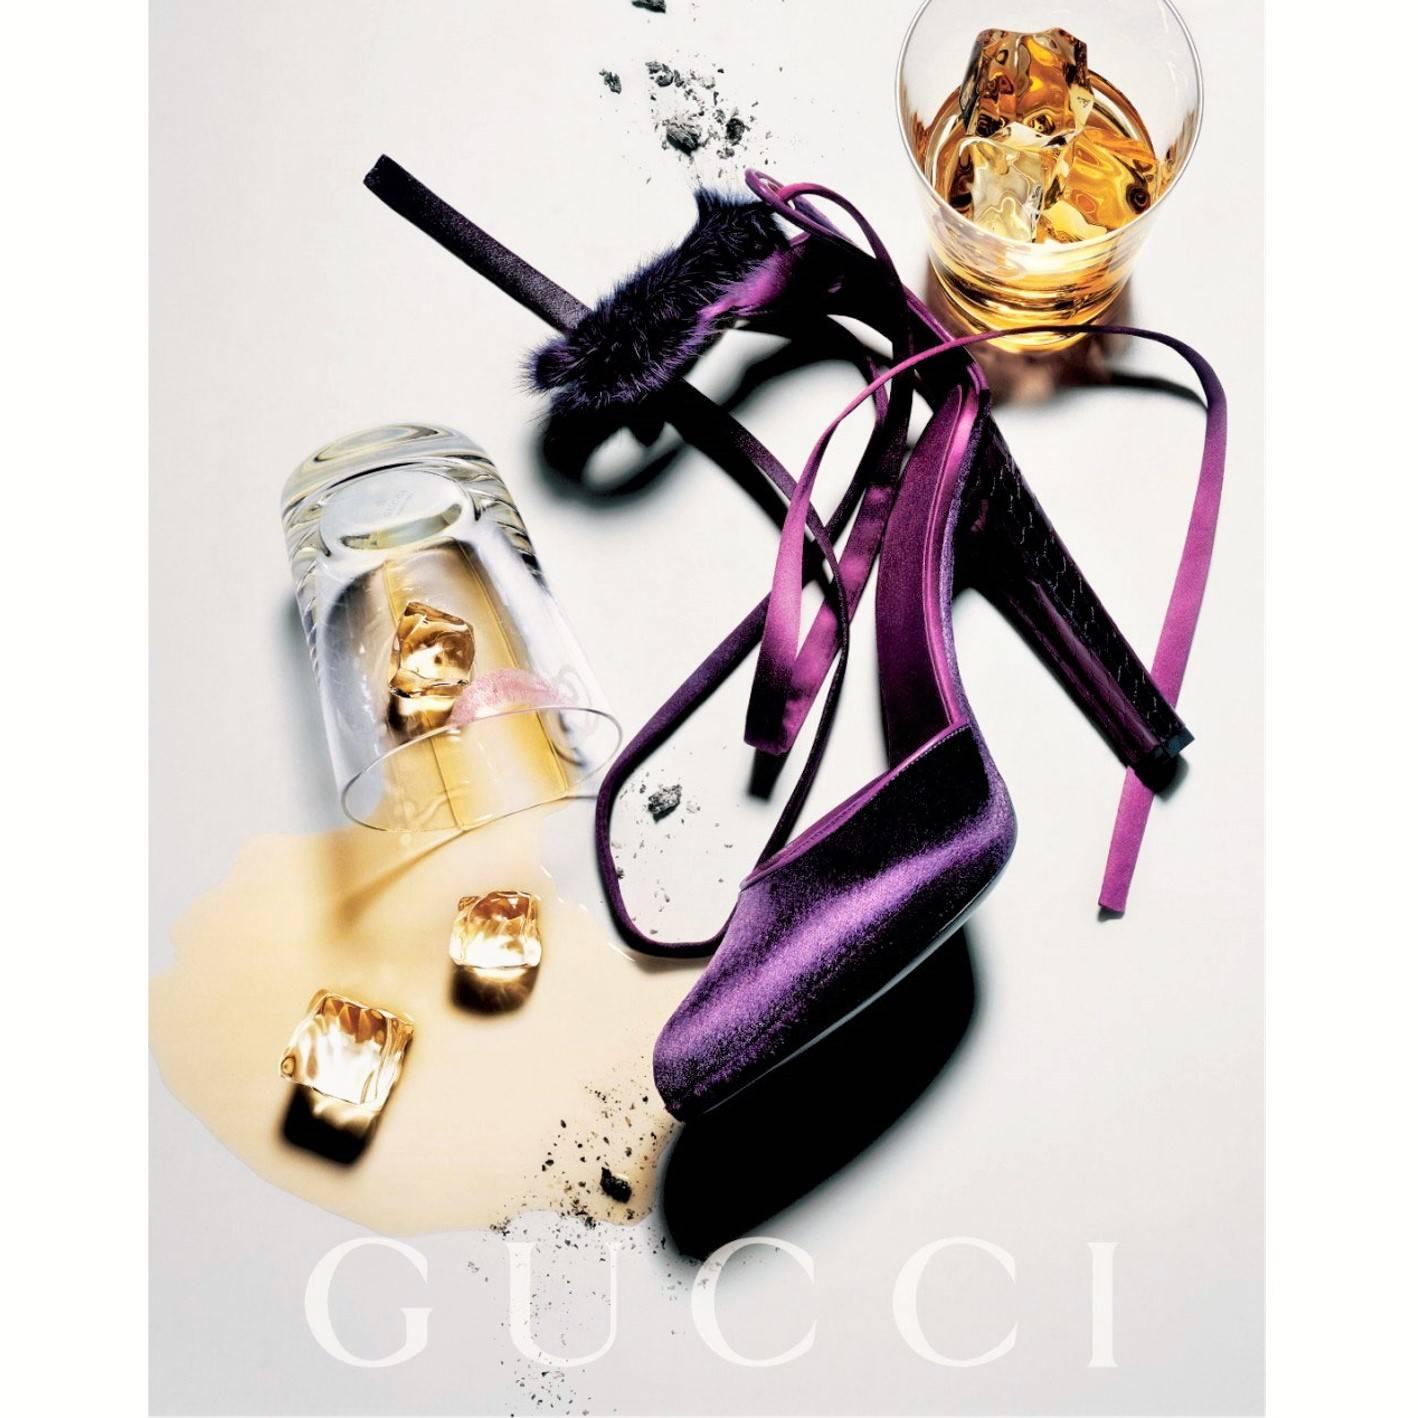 Tom Ford for Gucci Mink Python Heels
Brand New
U.S. Size: 7.5
* Mink, Satin, Python and Velvet heels
* Tom Ford's 